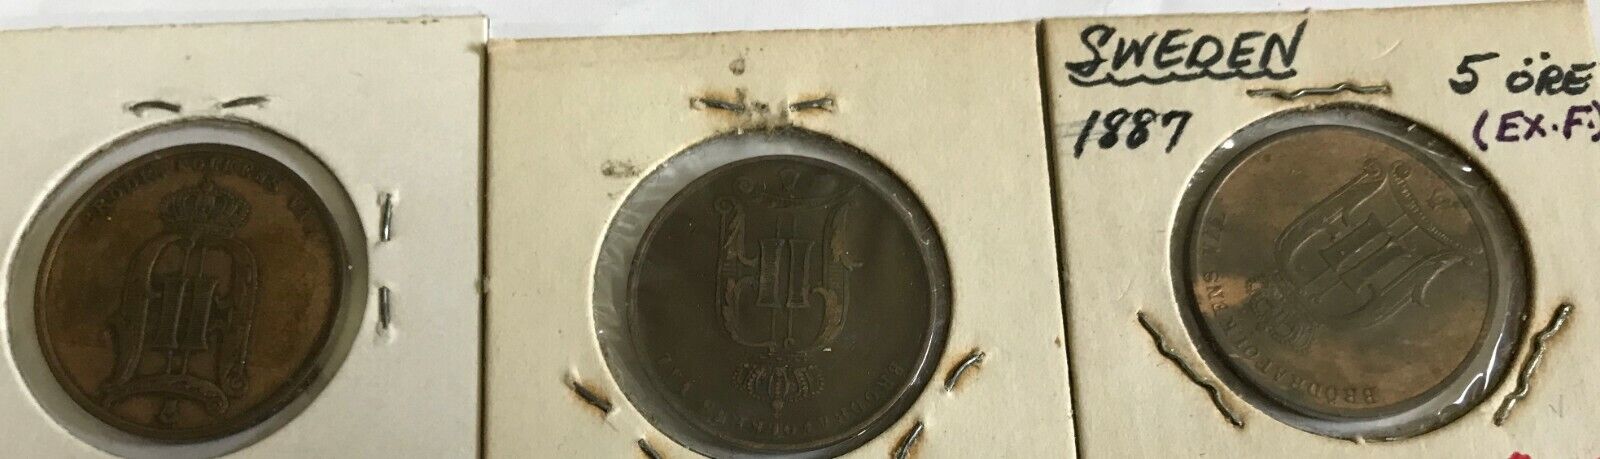 Sweden - lot of 3 coins - 5 ore - 1874 VF, 1875 VF, 1887 EF - KM 736 Без бренда - фотография #2